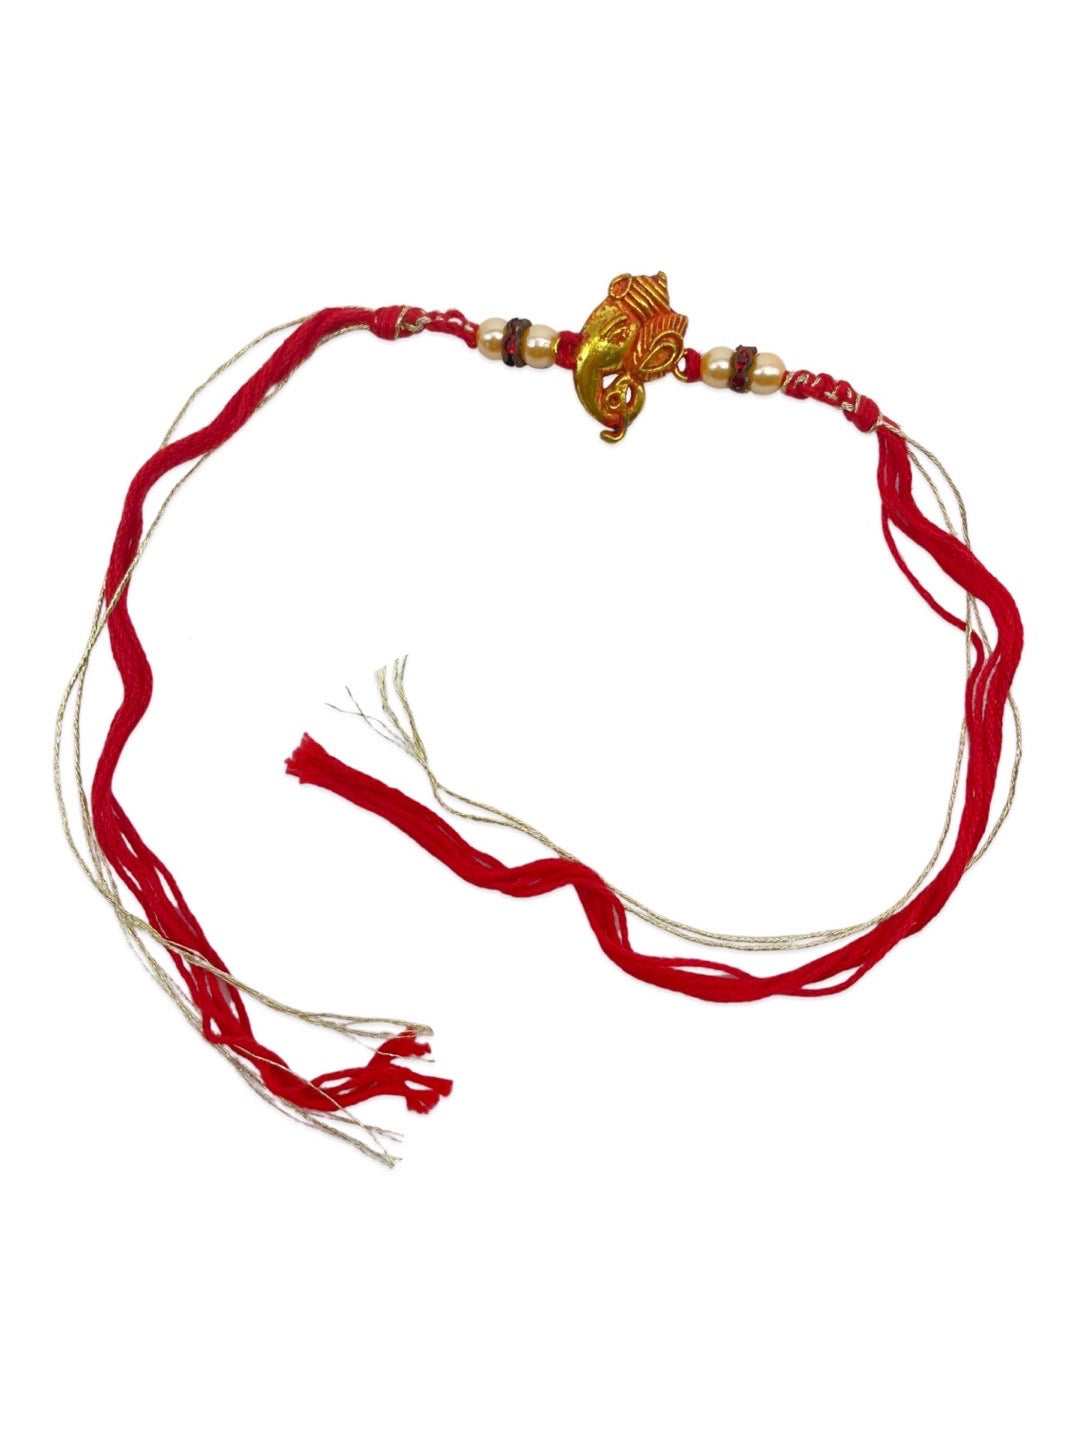 Lord Ganesha With Pearls Rakhi Bracelet for Raksha Bandhan